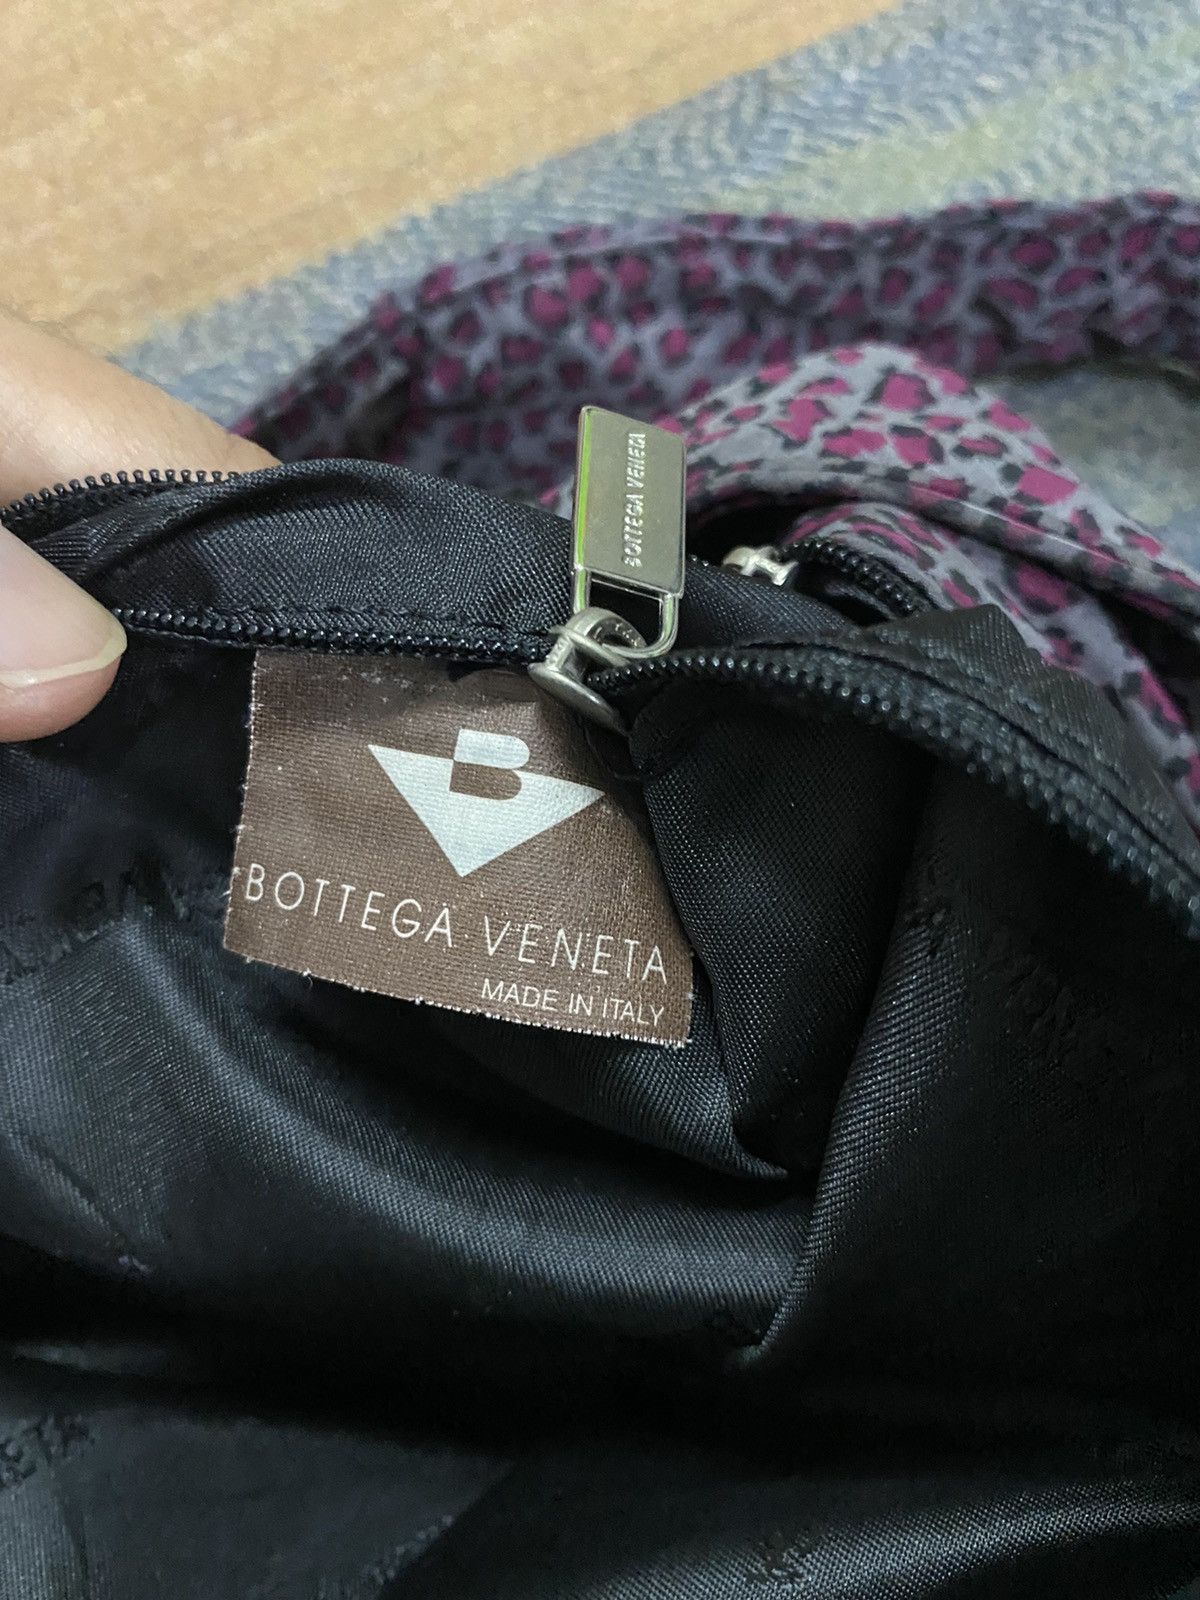 Authentic Bottega Venet Leopard Print Shoulder Bag - 17